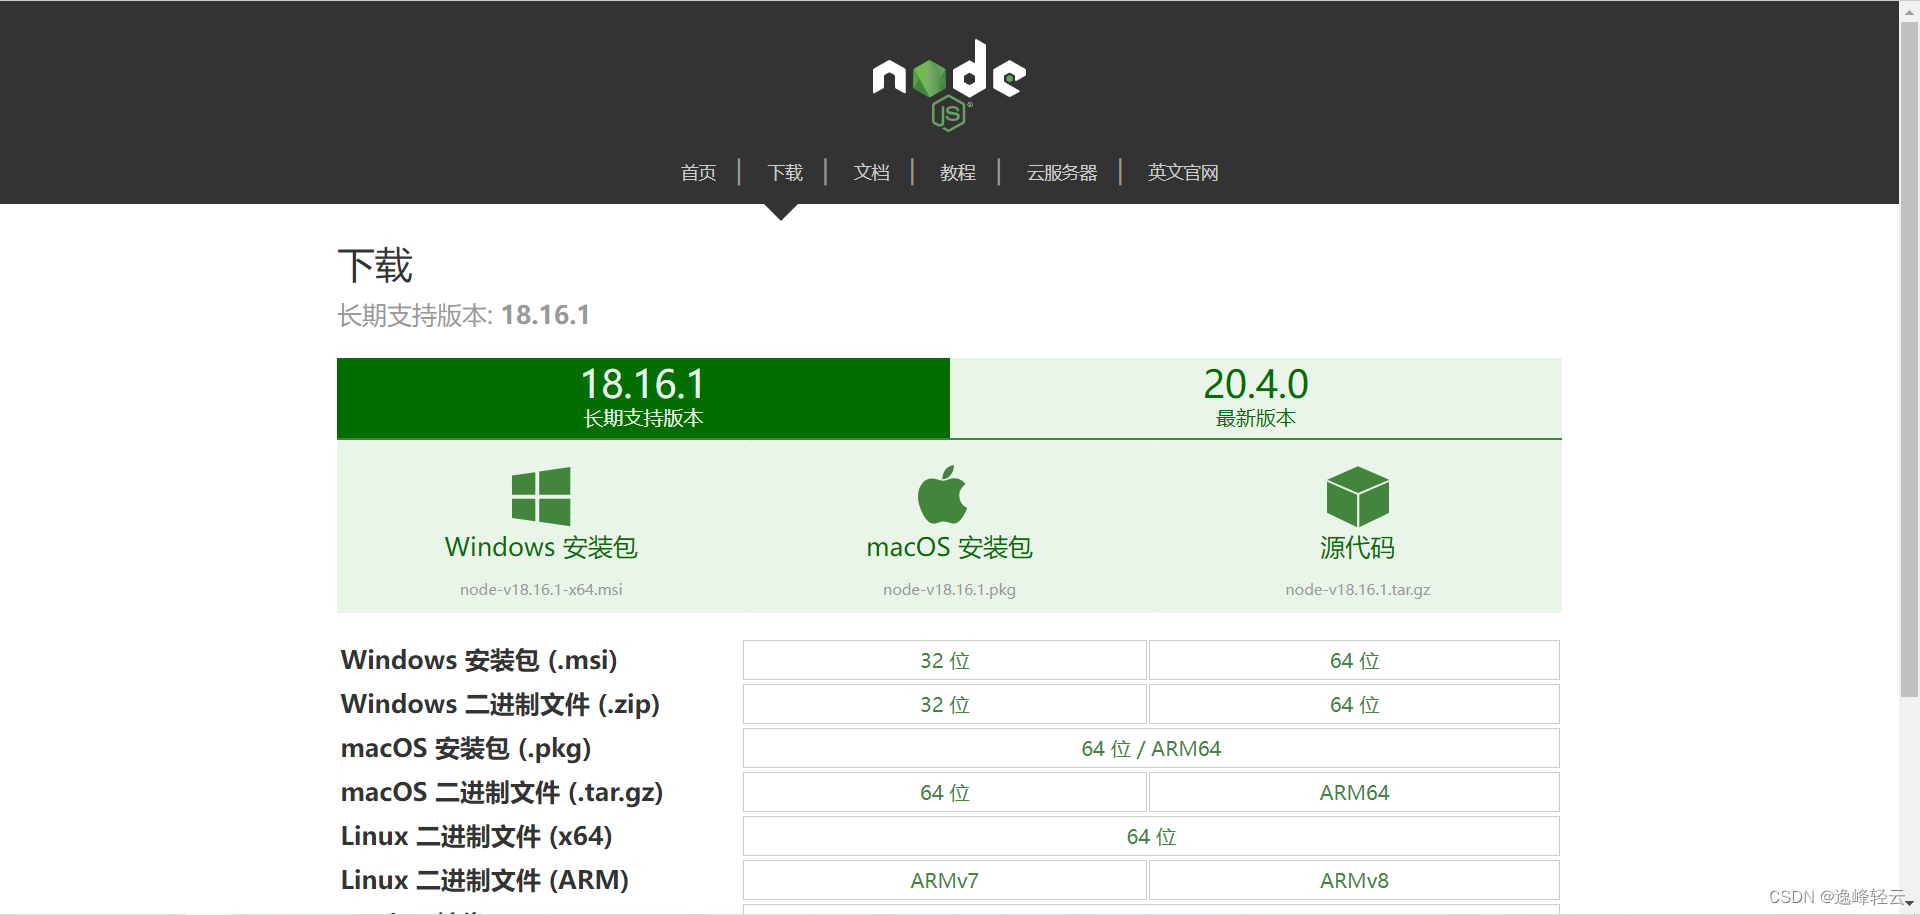 Node.js Chinese Network